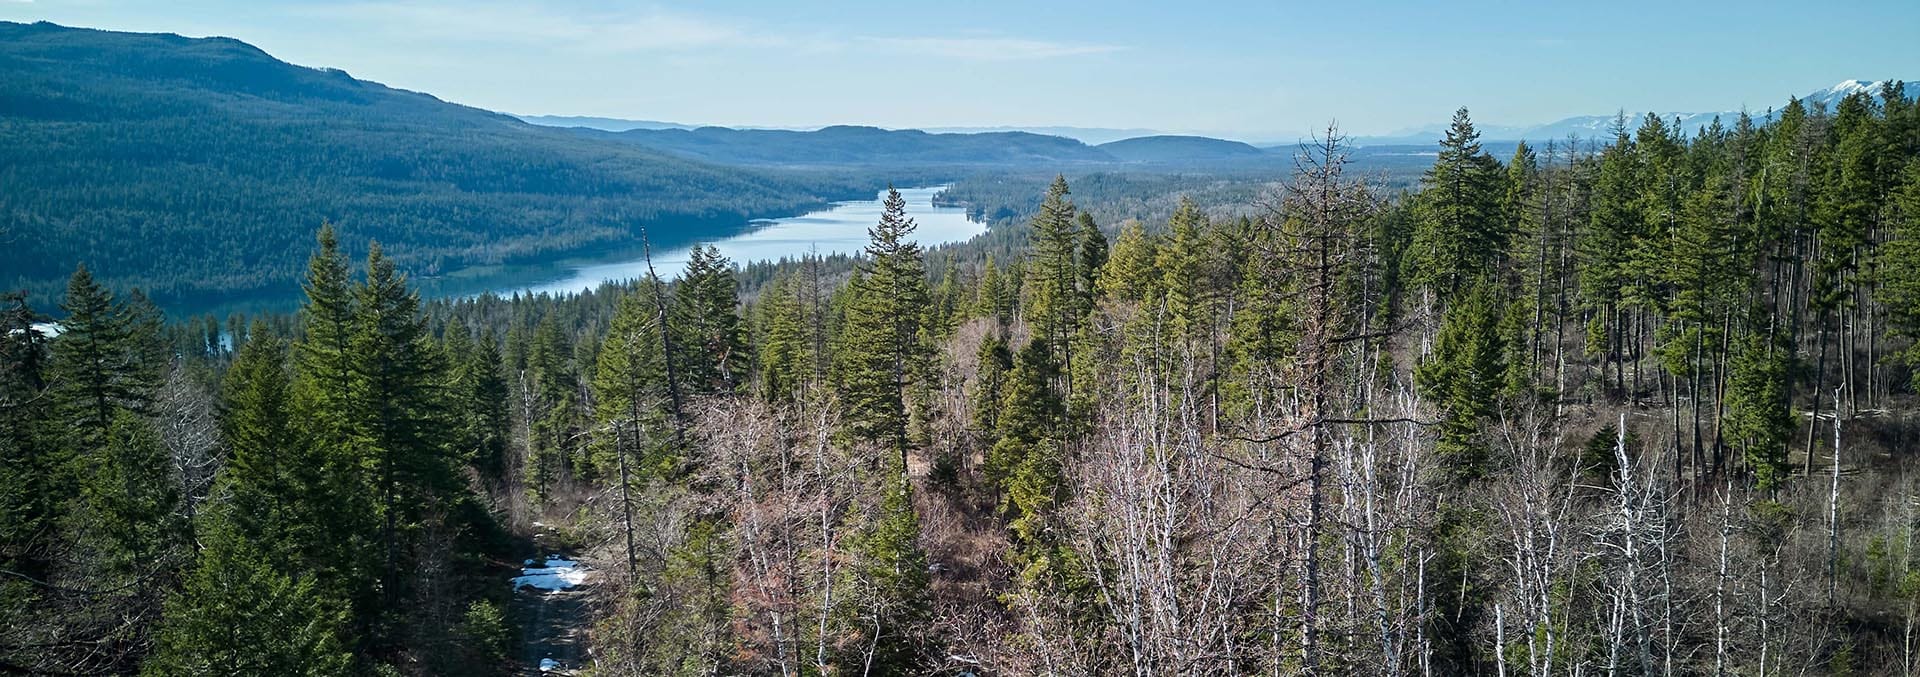 montana hunting property for sale swan lake overlook